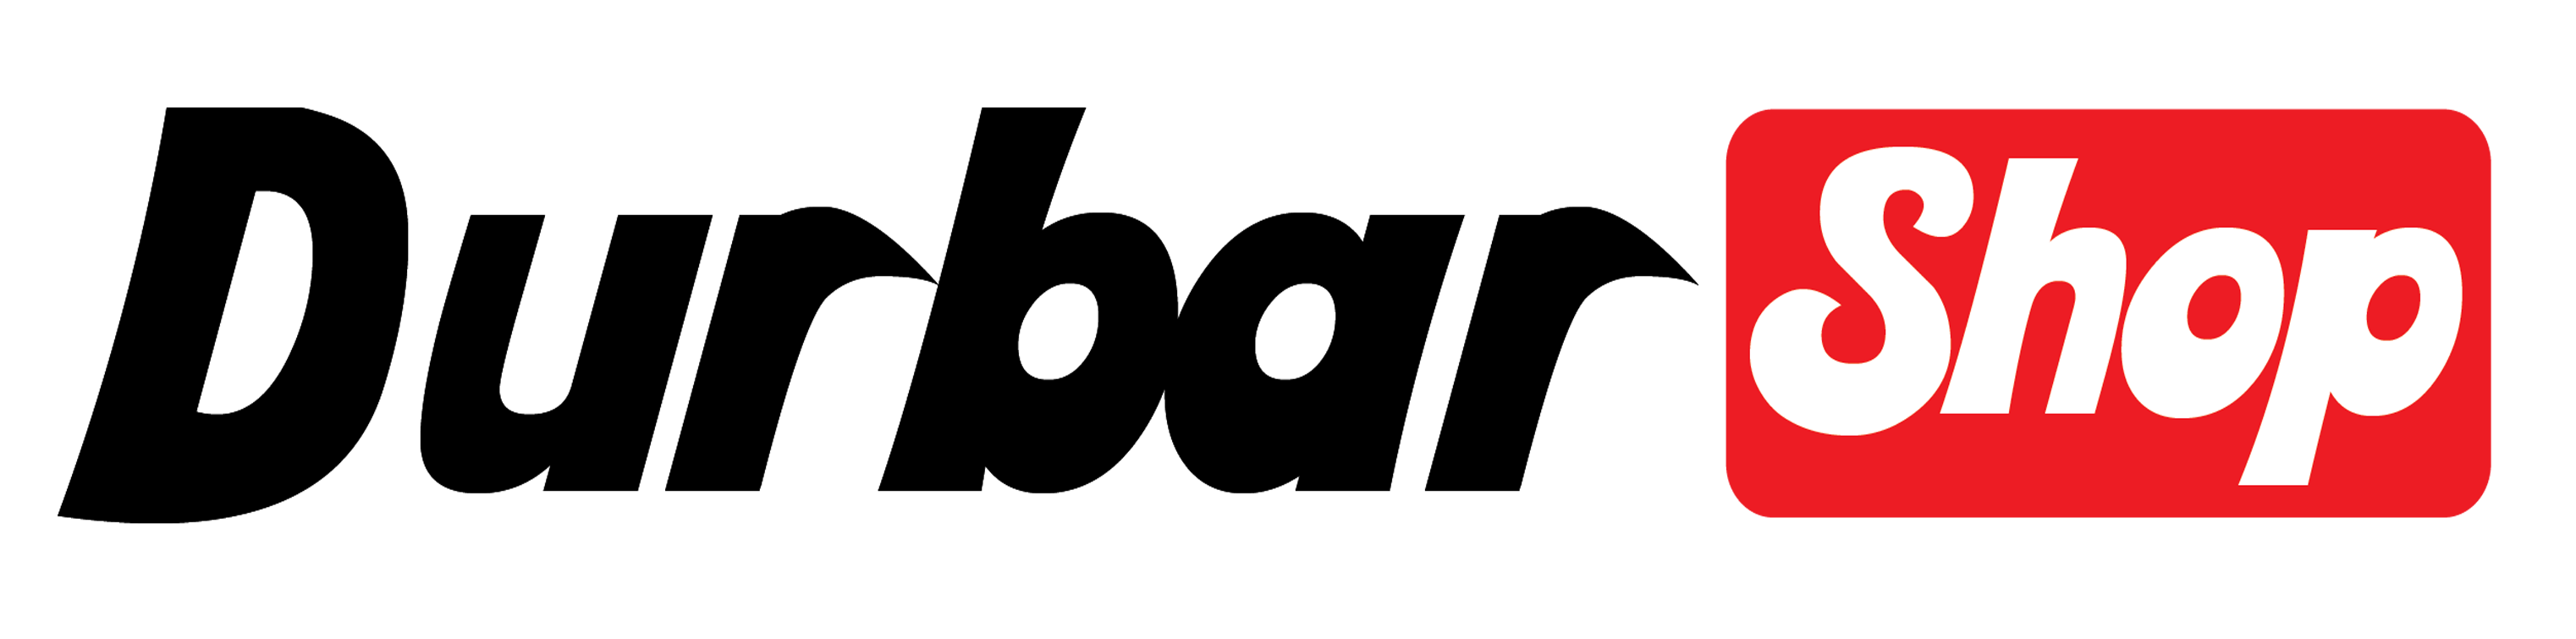 Durbarshop Logo